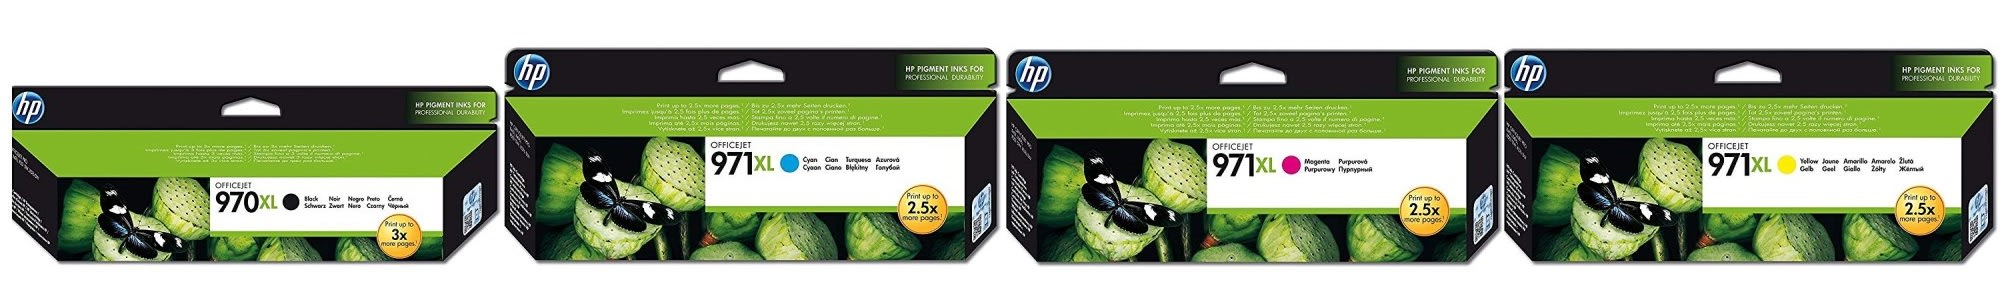 Картриджи hp 970XL hp 971XL для HP OfficeJet Pro X551dw. Купить комплект оригинальных картриджей.